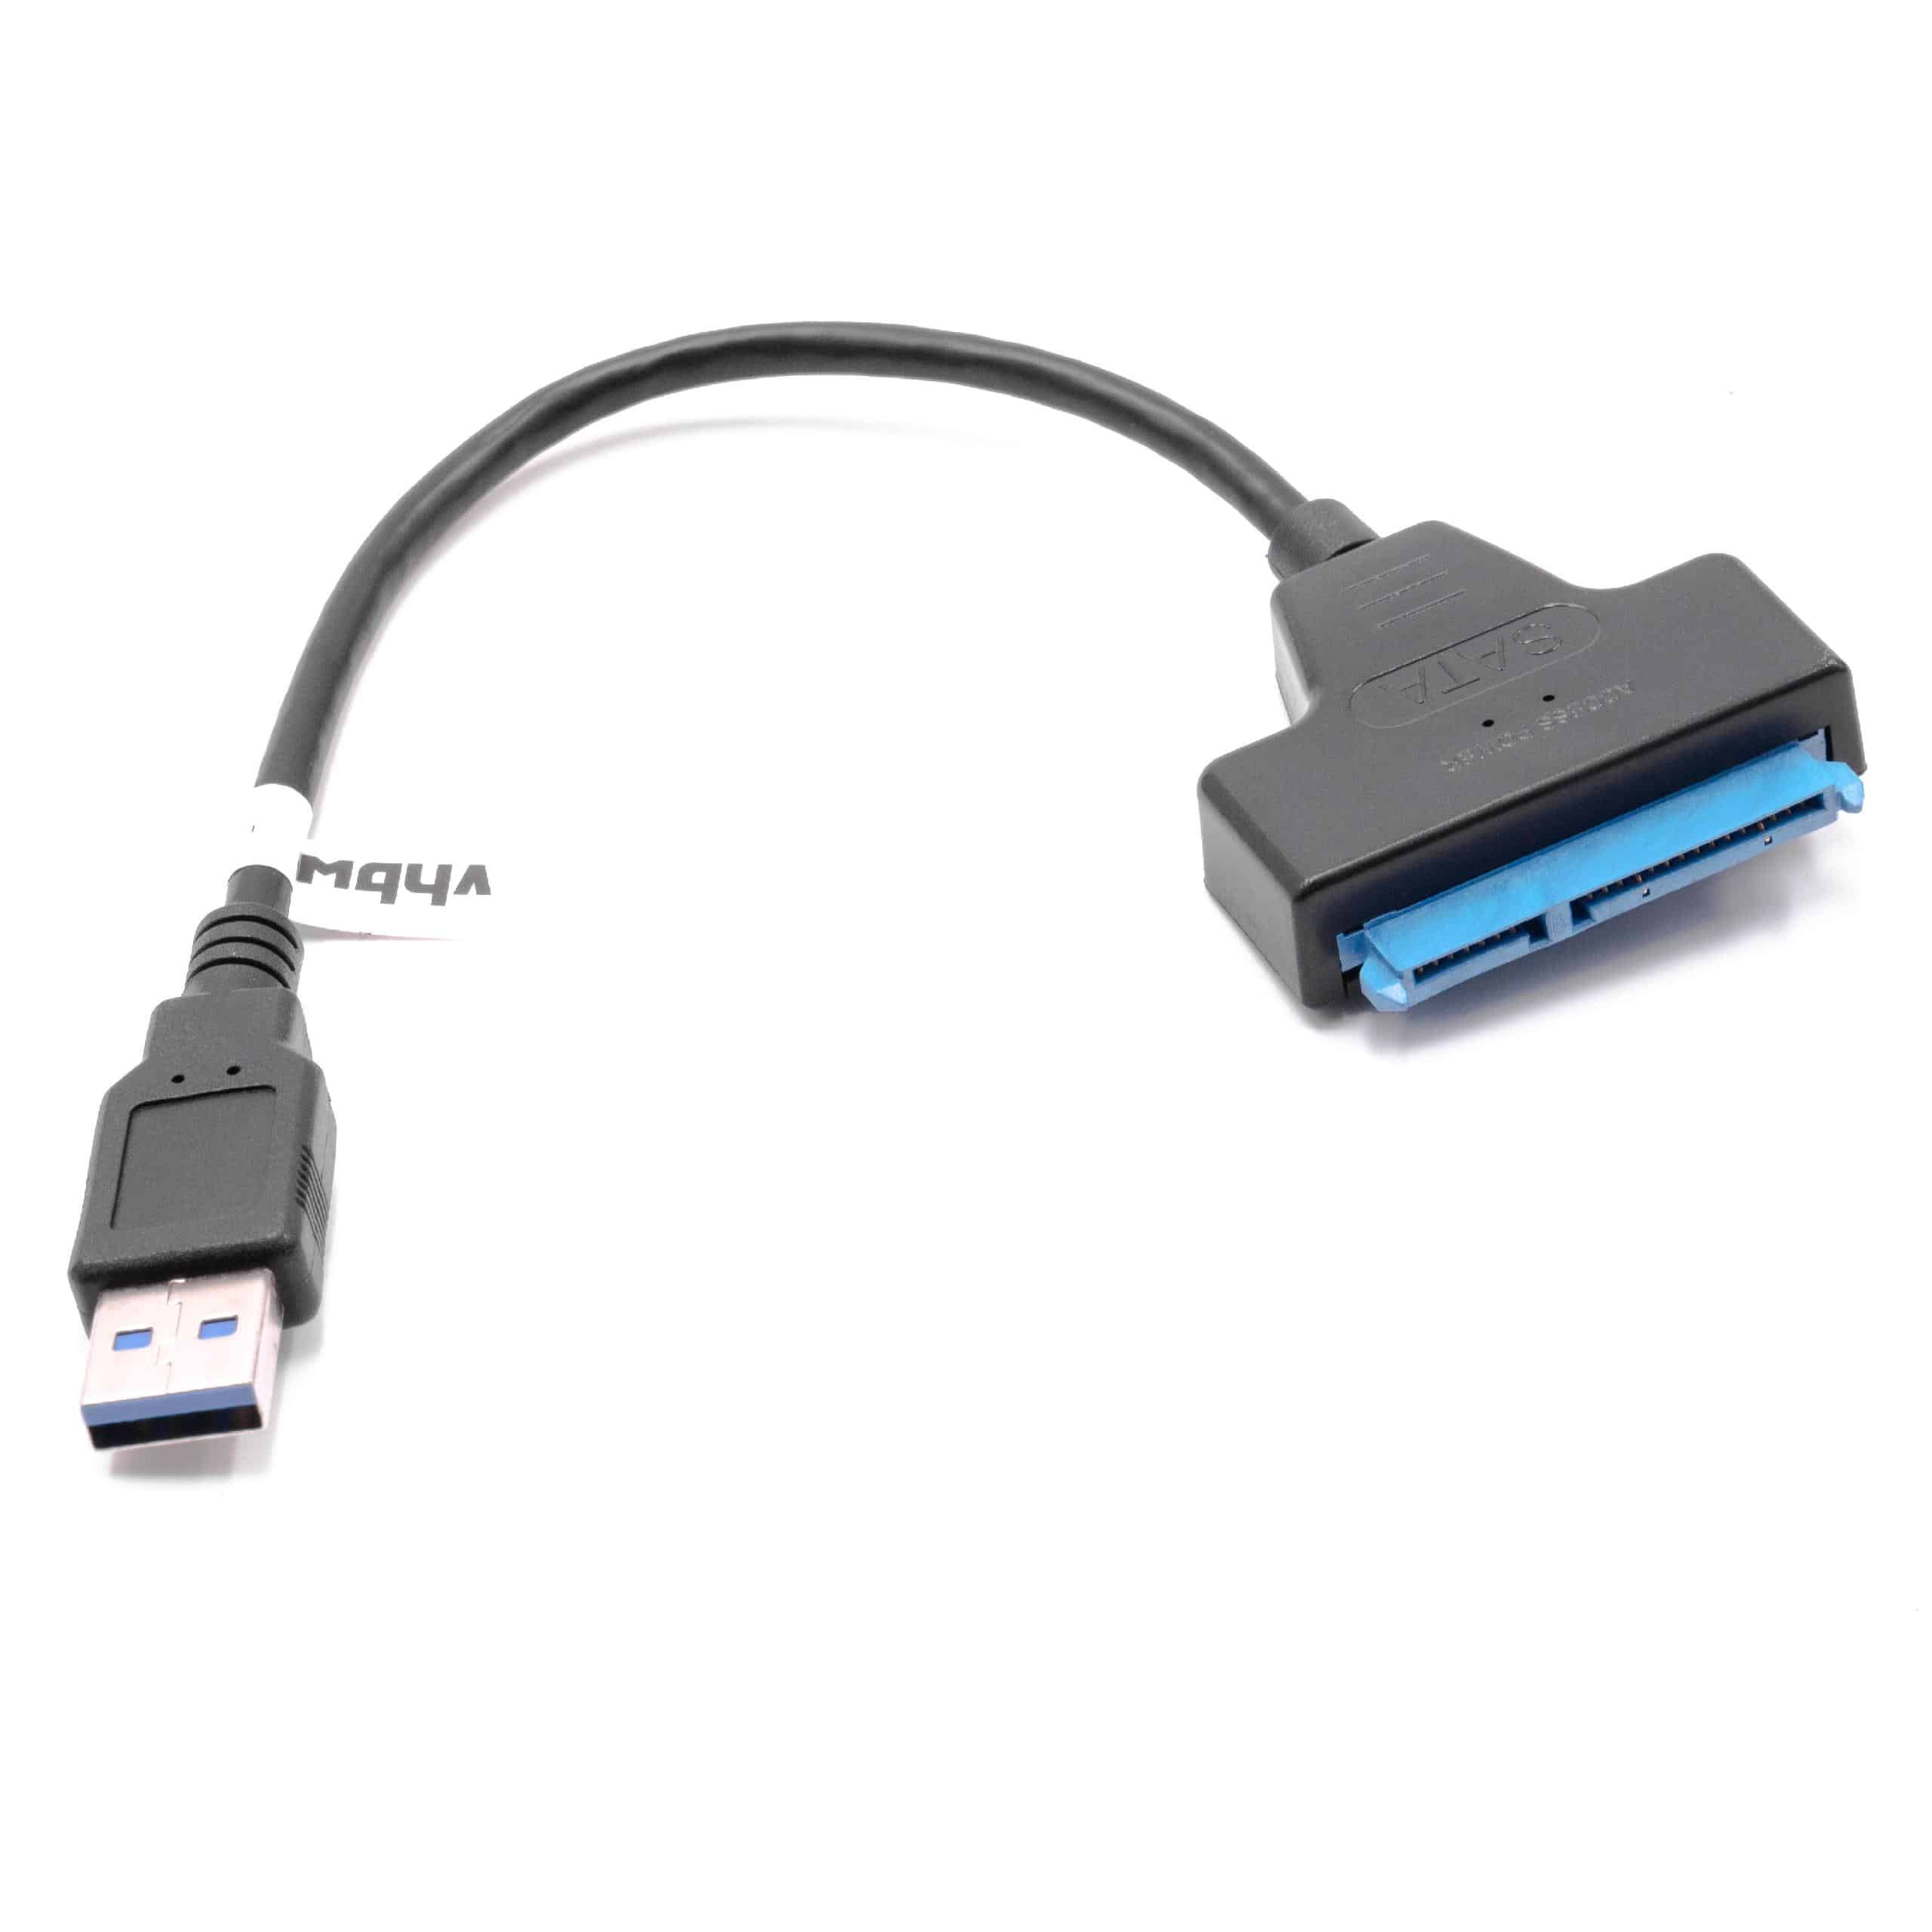 SATA III vers USB 3.0 Câble de raccordement pour disque dur HDD, SSD Plug & Play noir / bleu